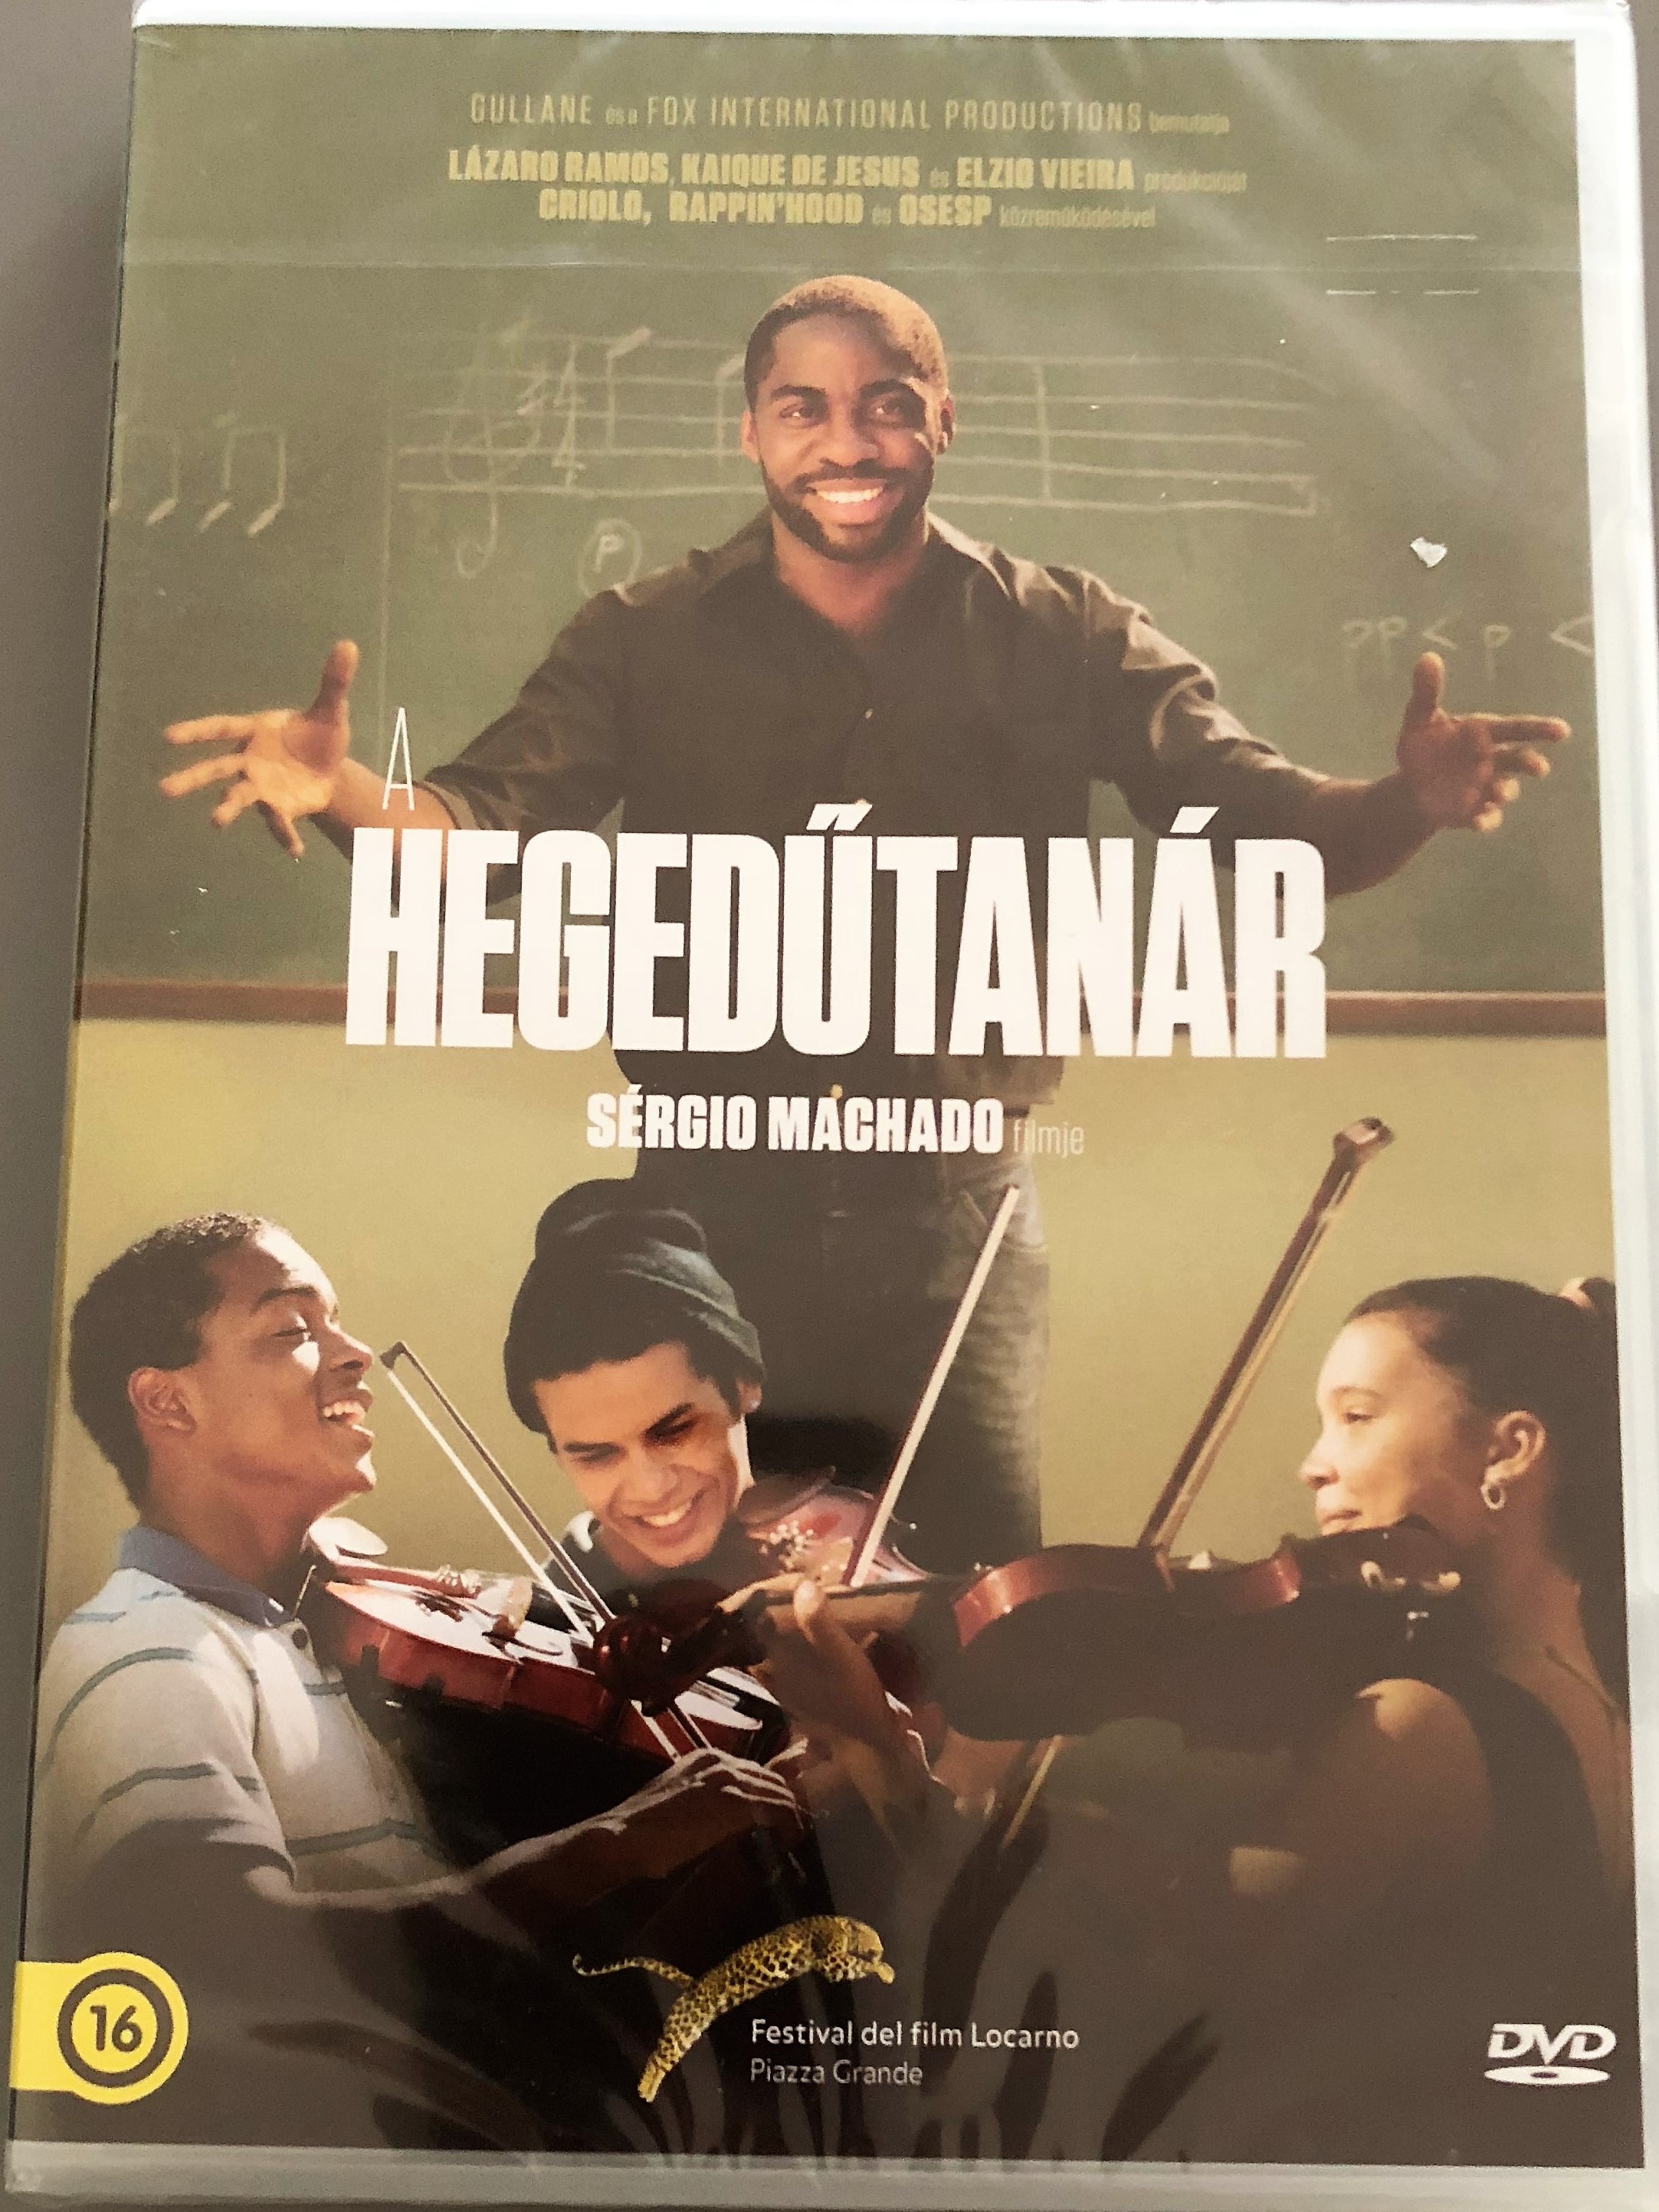 the-violin-teacher-dvd-2015-a-heged-tan-r-directed-by-s-rgio-mach-do-starring-fernanda-de-freitas-kaique-de-jesus-l-zaro-ramos-elzio-vieira-1-.jpg